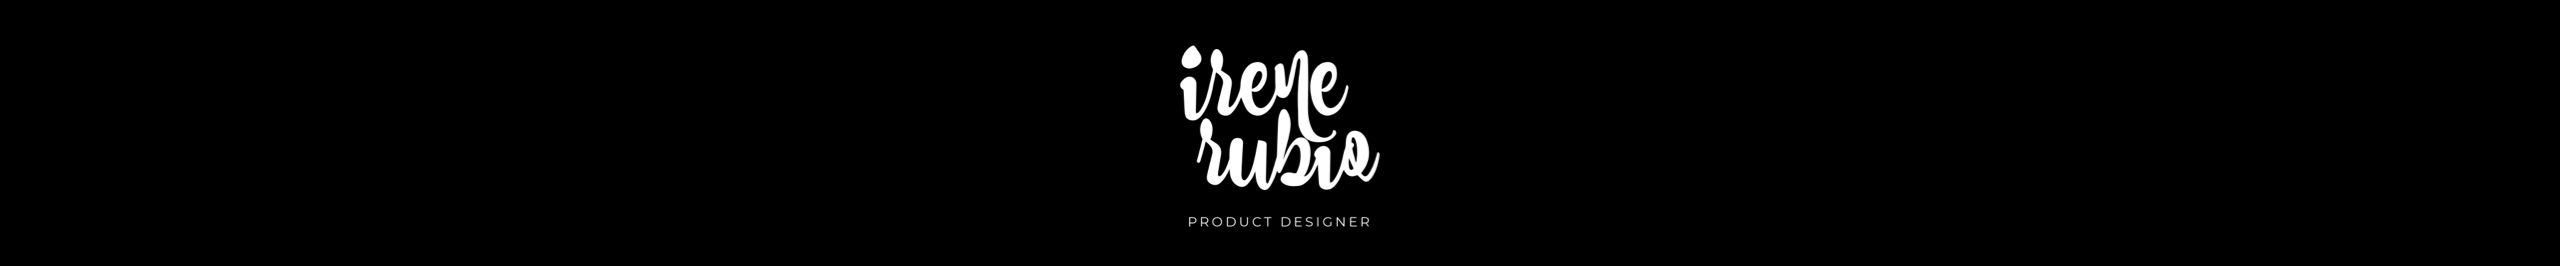 Irene Rubio's profile banner